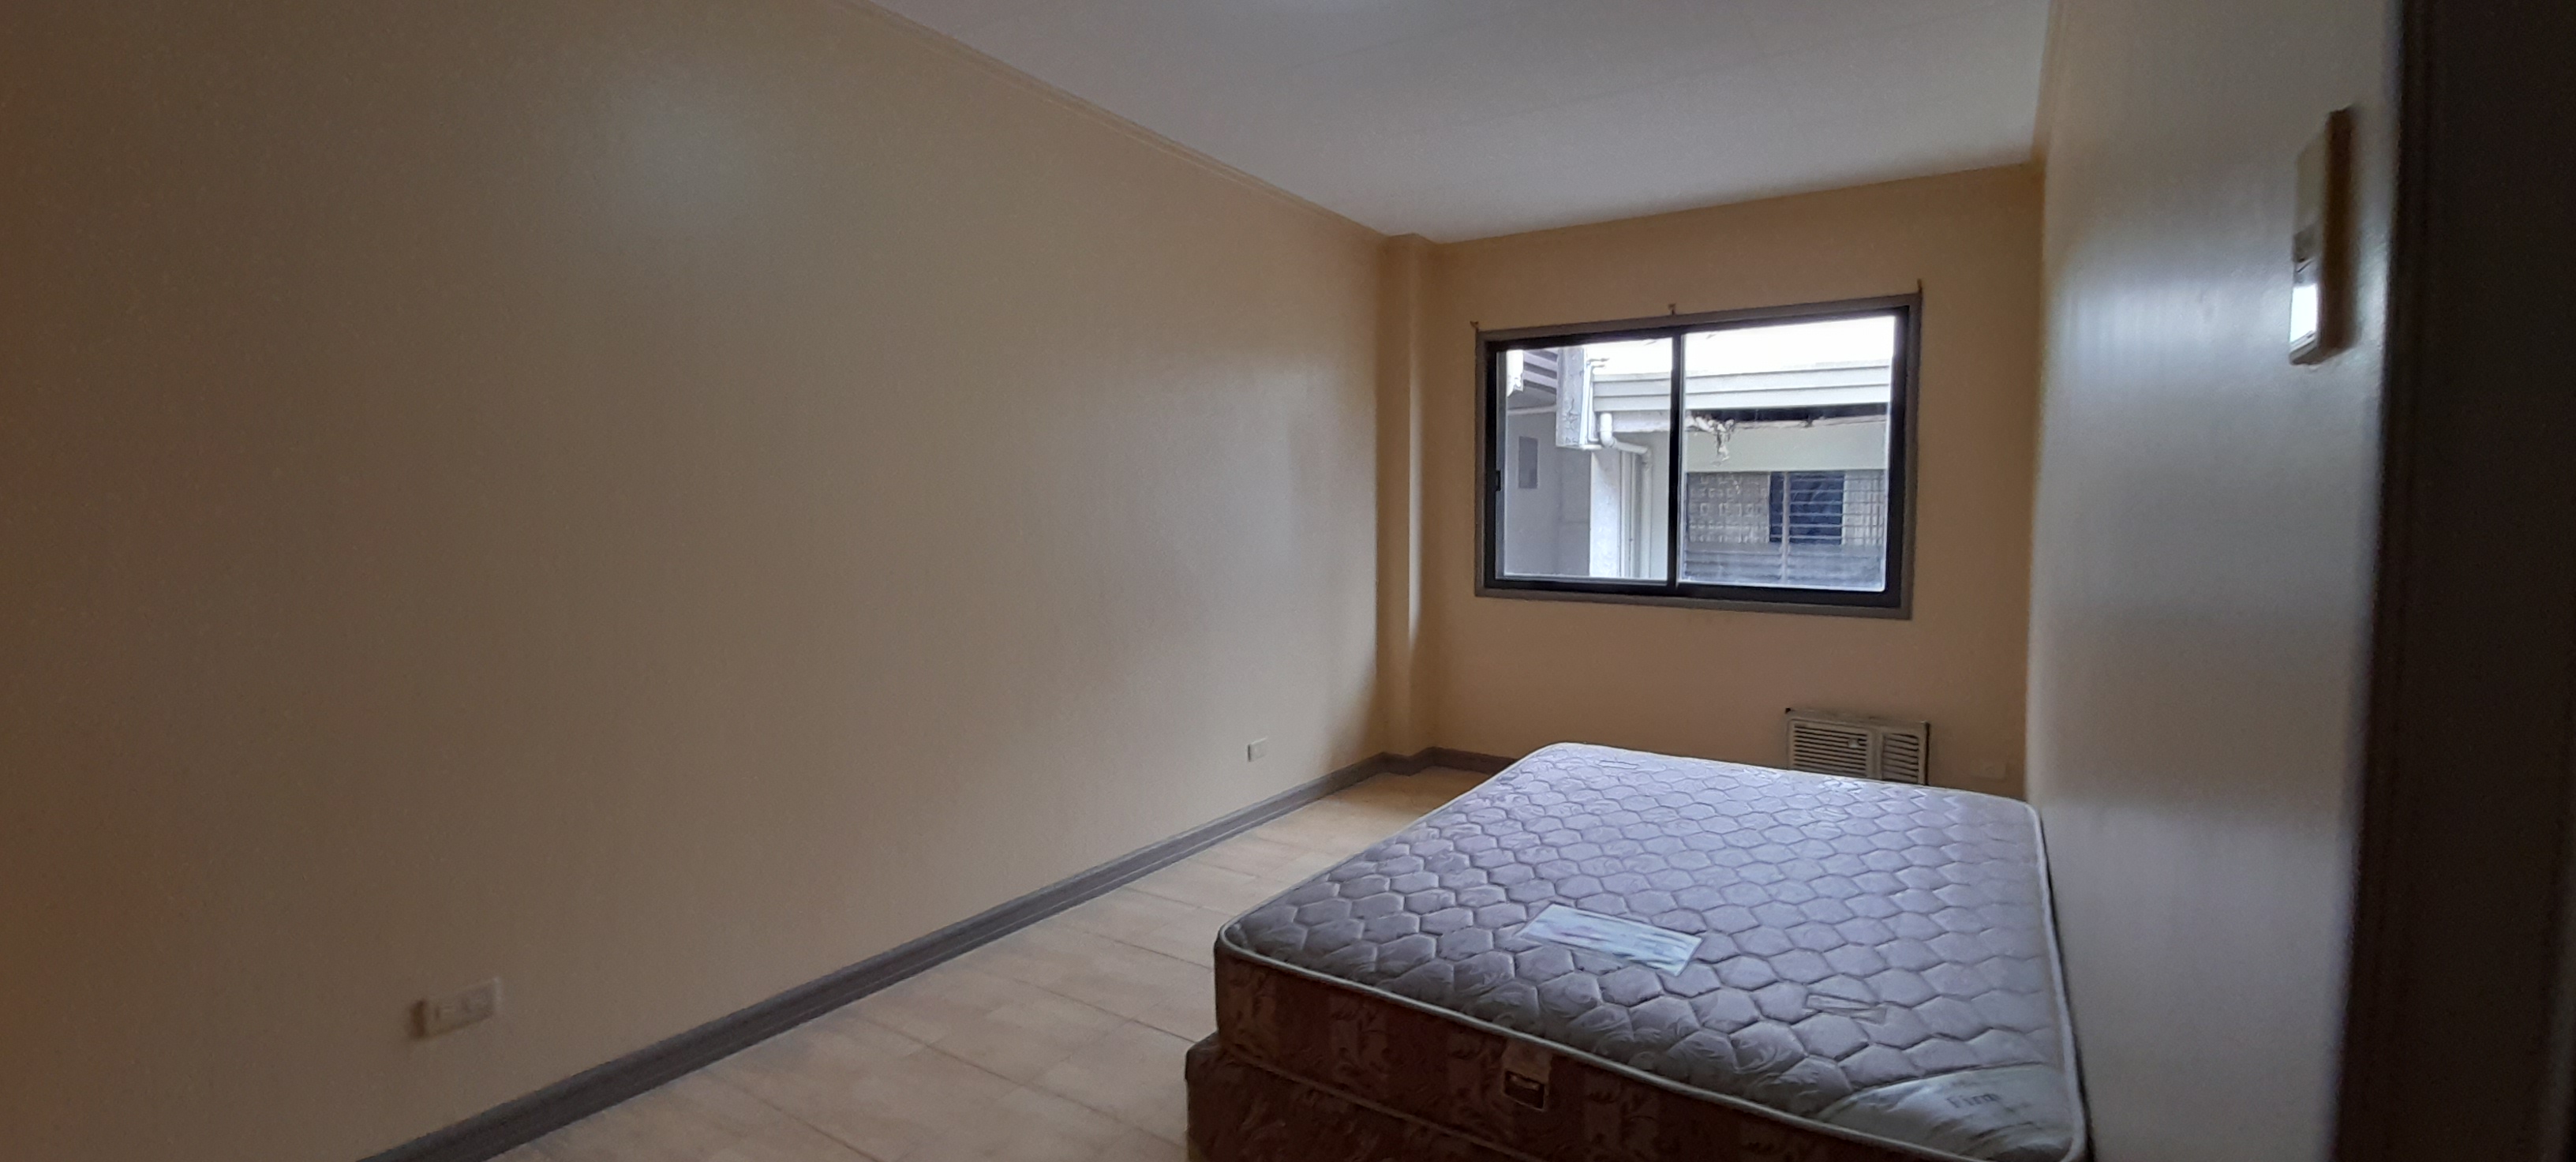 3-bedroom-house-located-in-banawa-cebu-city-semi-furnished